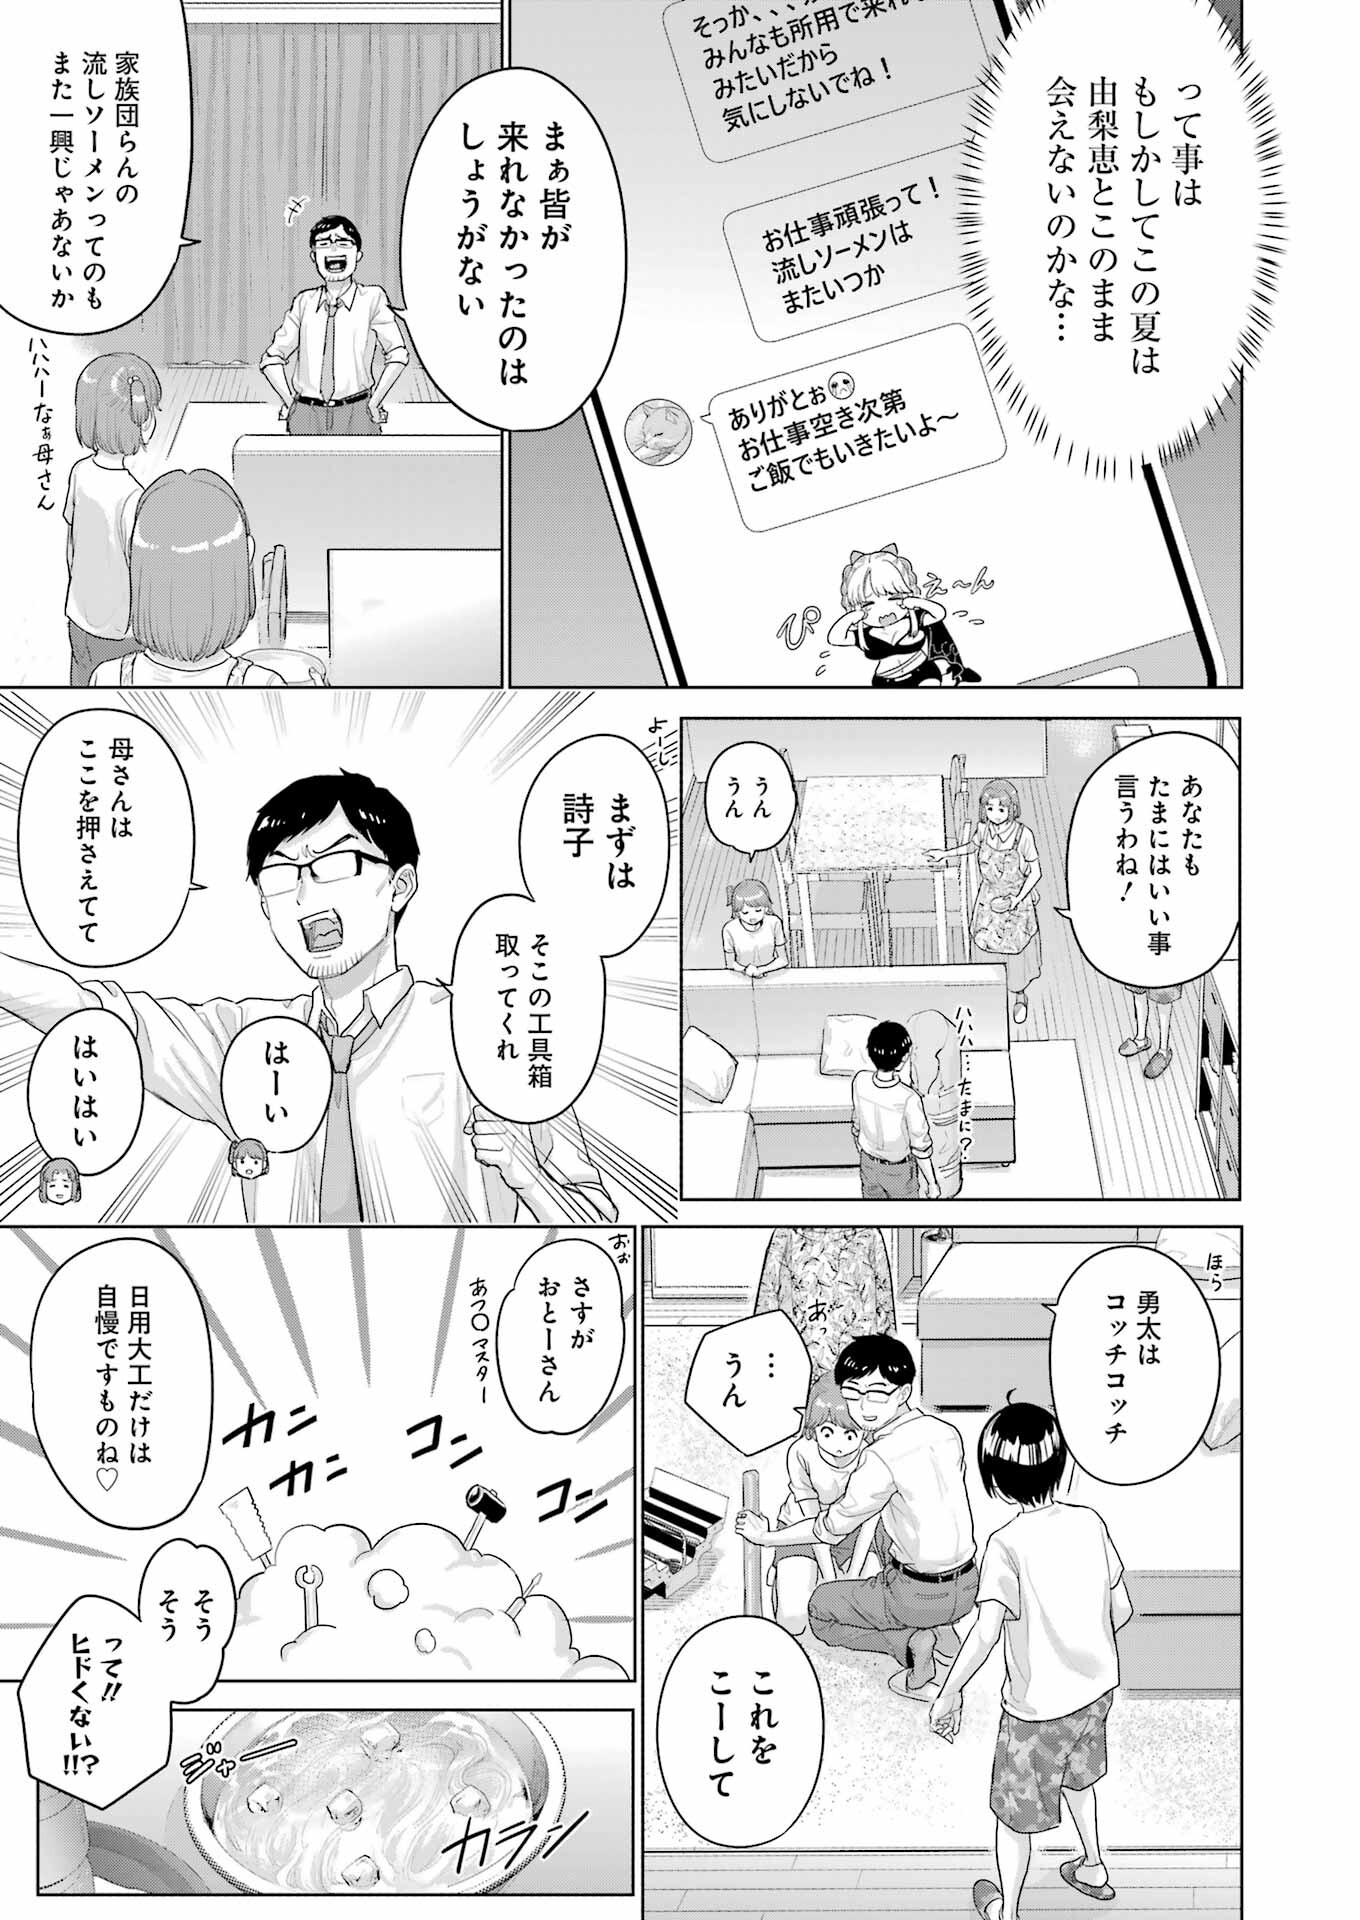 Koukousei Web Sakka no Mote Seikatsu - Chapter 30 - Page 21